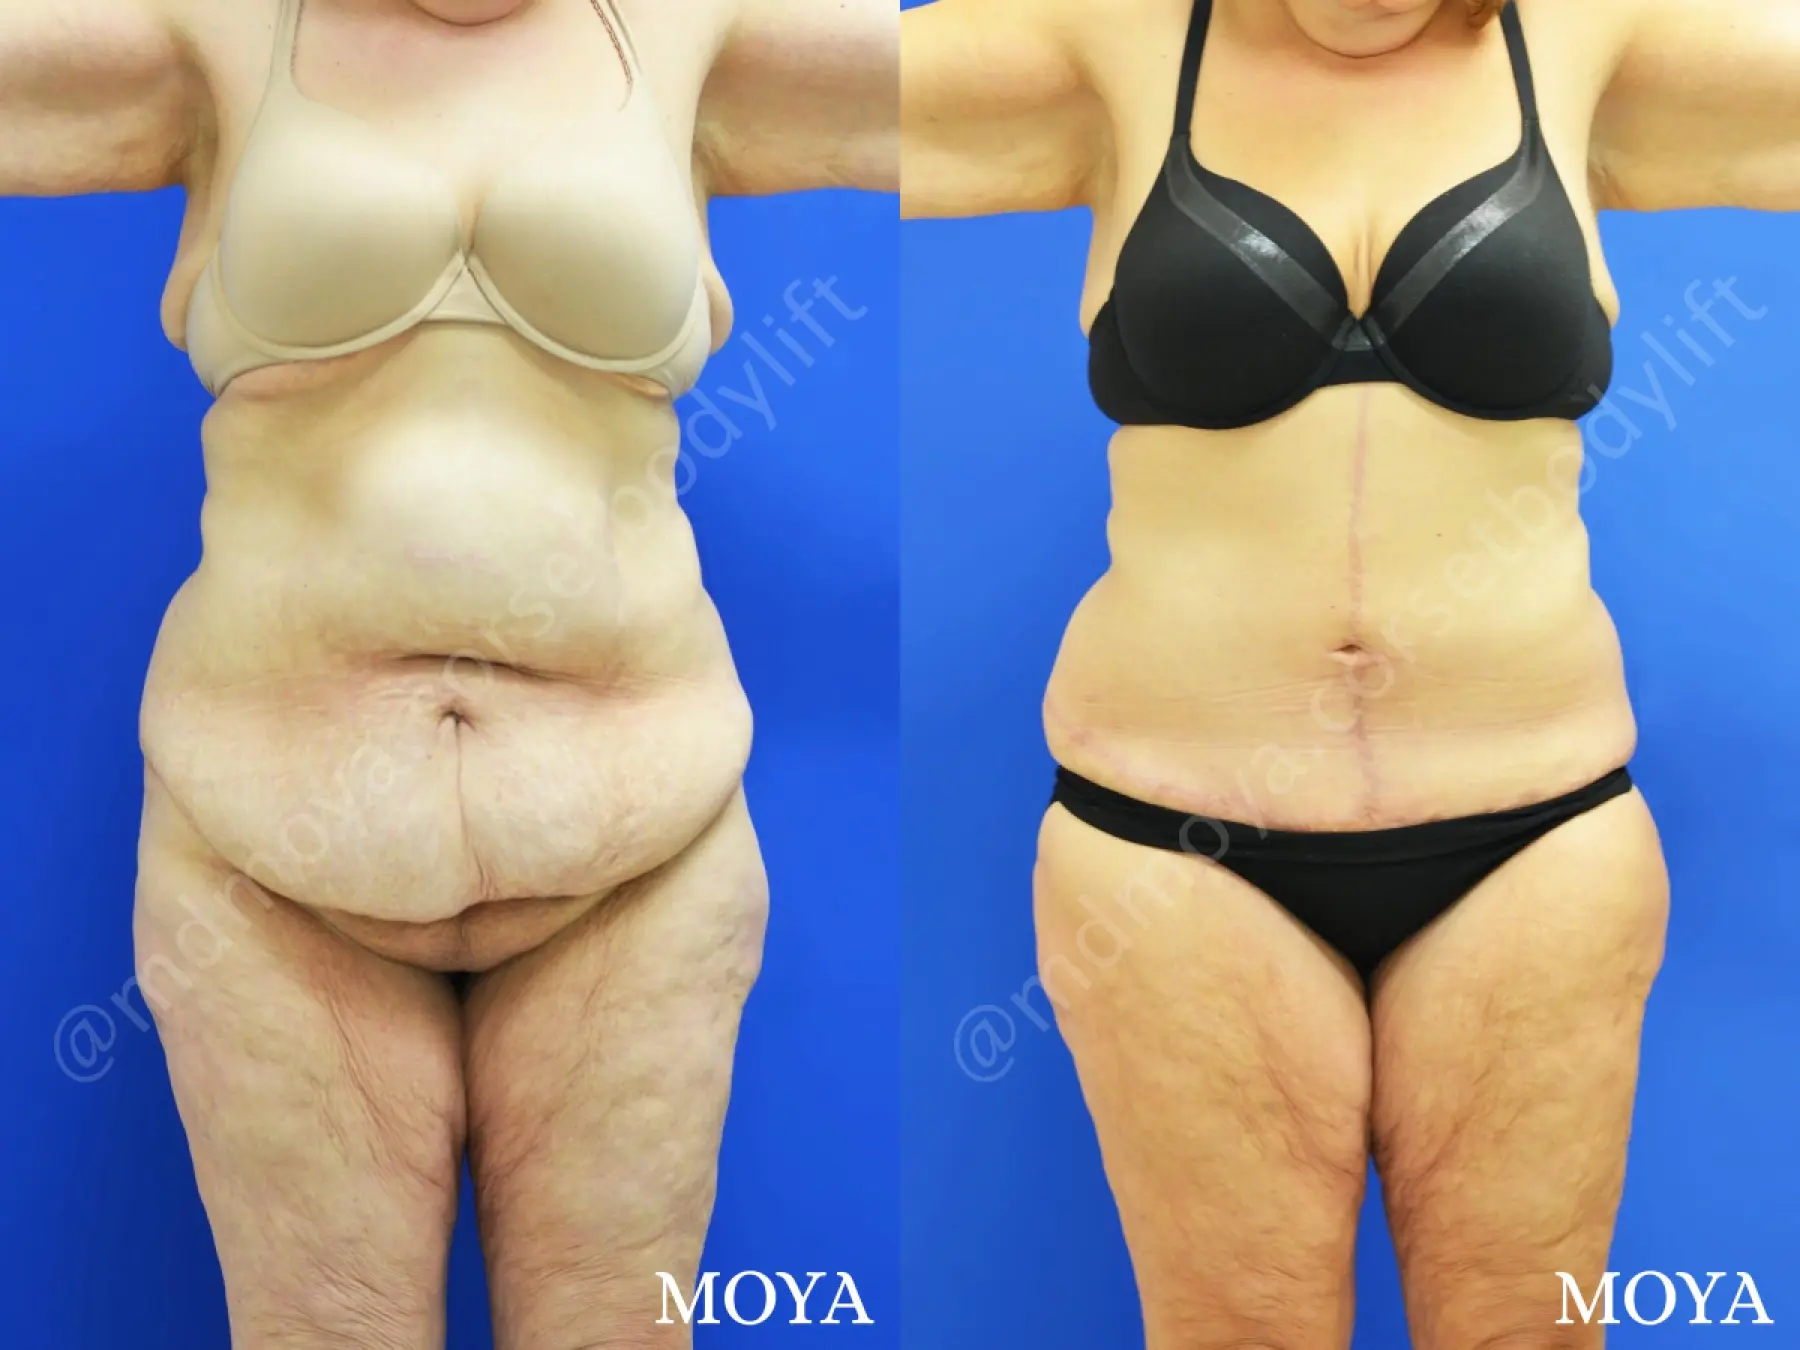 Fleur-de-lis Tummy Tuck (ltd):  BMI 34 - Before and After  